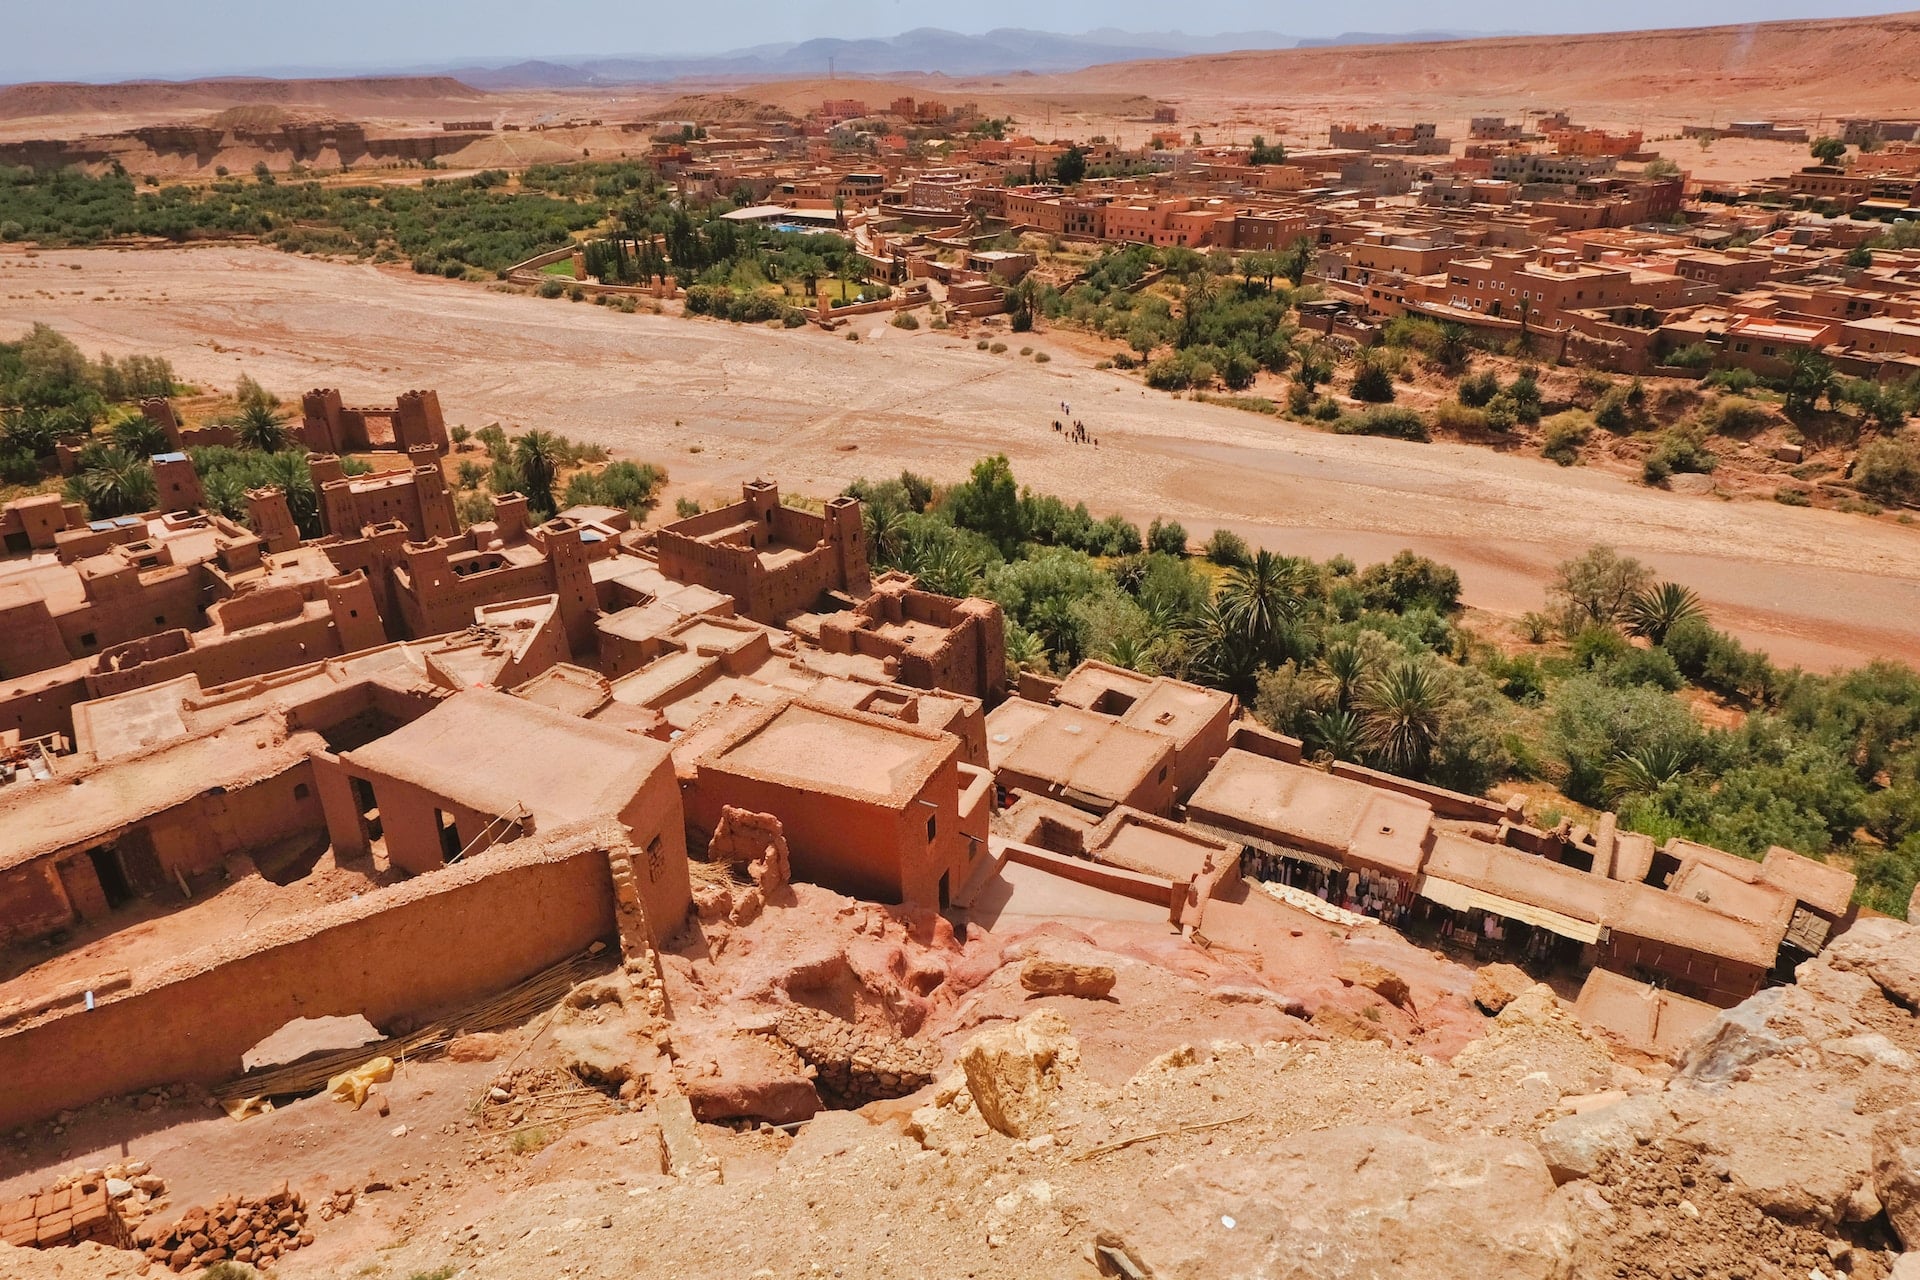 Ait Ben Haddou, Ouarzazate